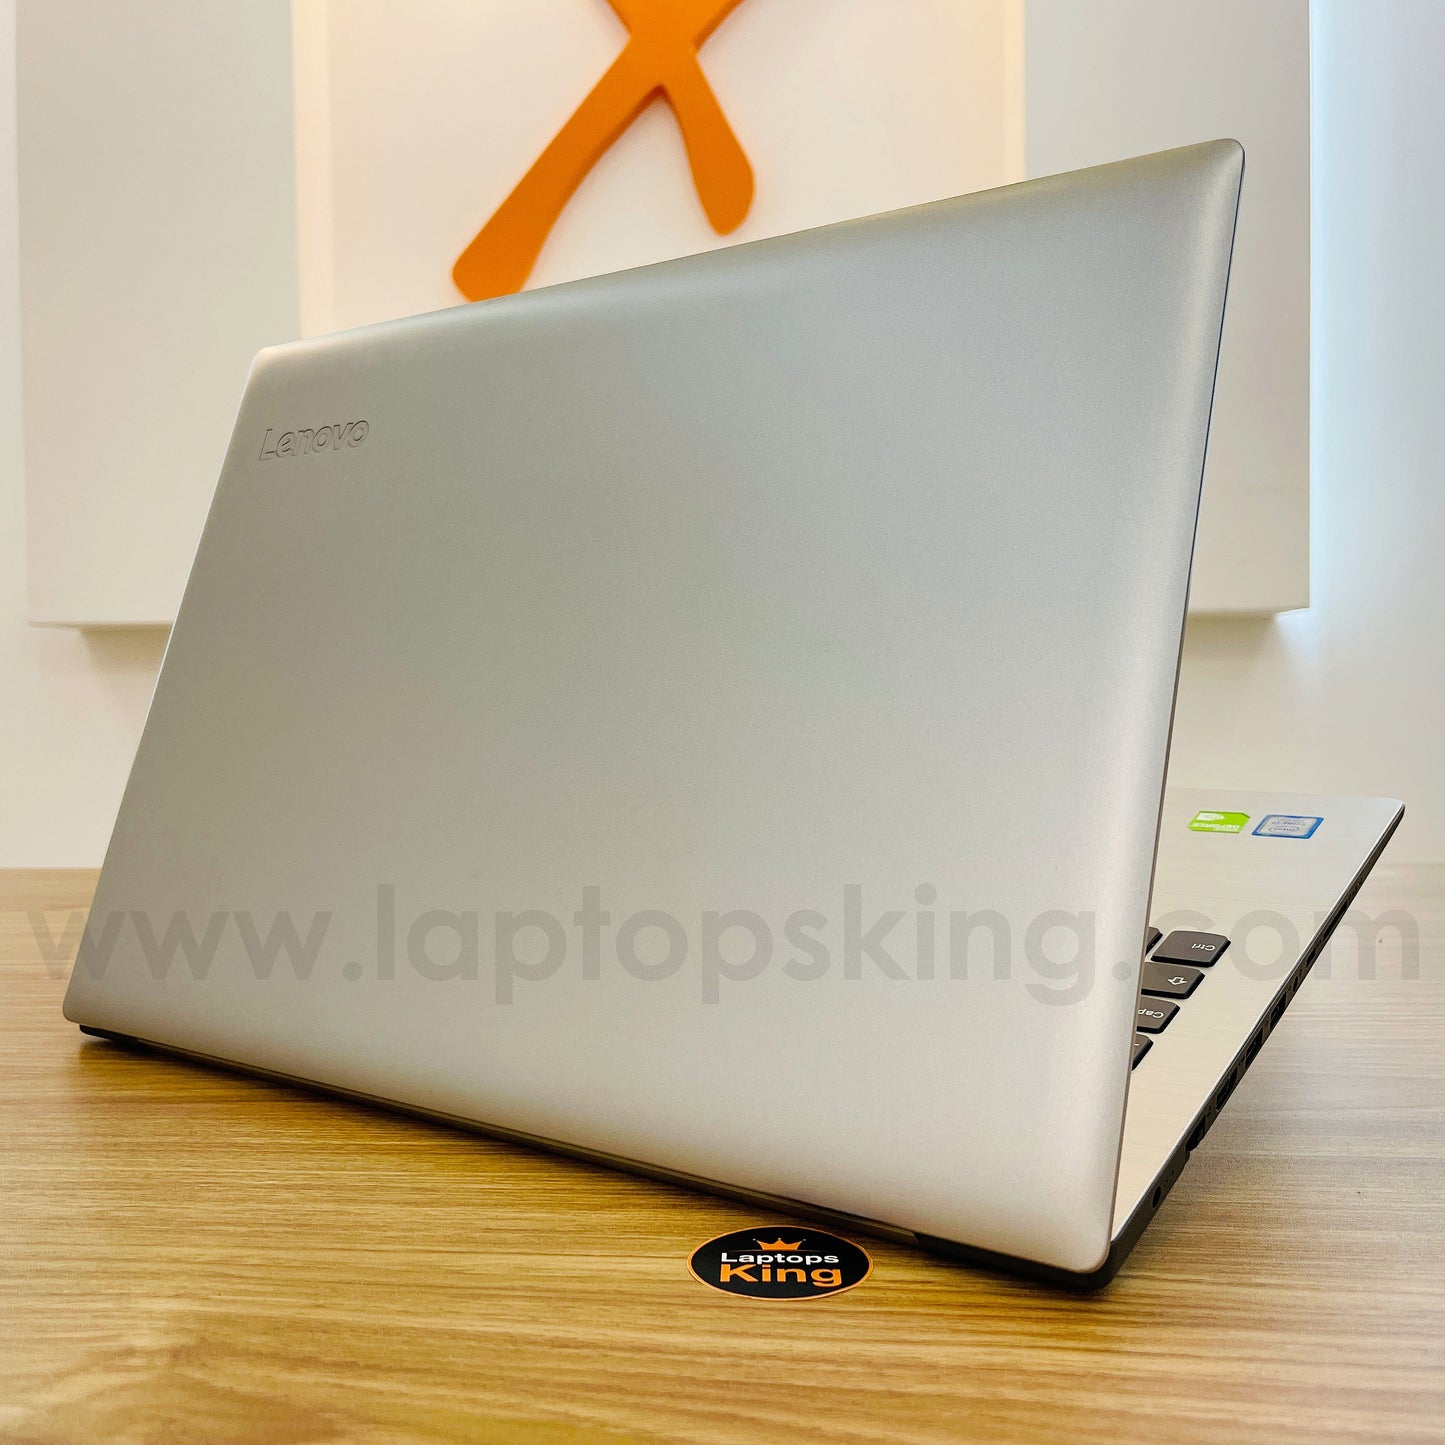 Lenovo IdeaPad 320 80XL i7-7500u 920MX 15.6" Laptop (Used Very Clean)